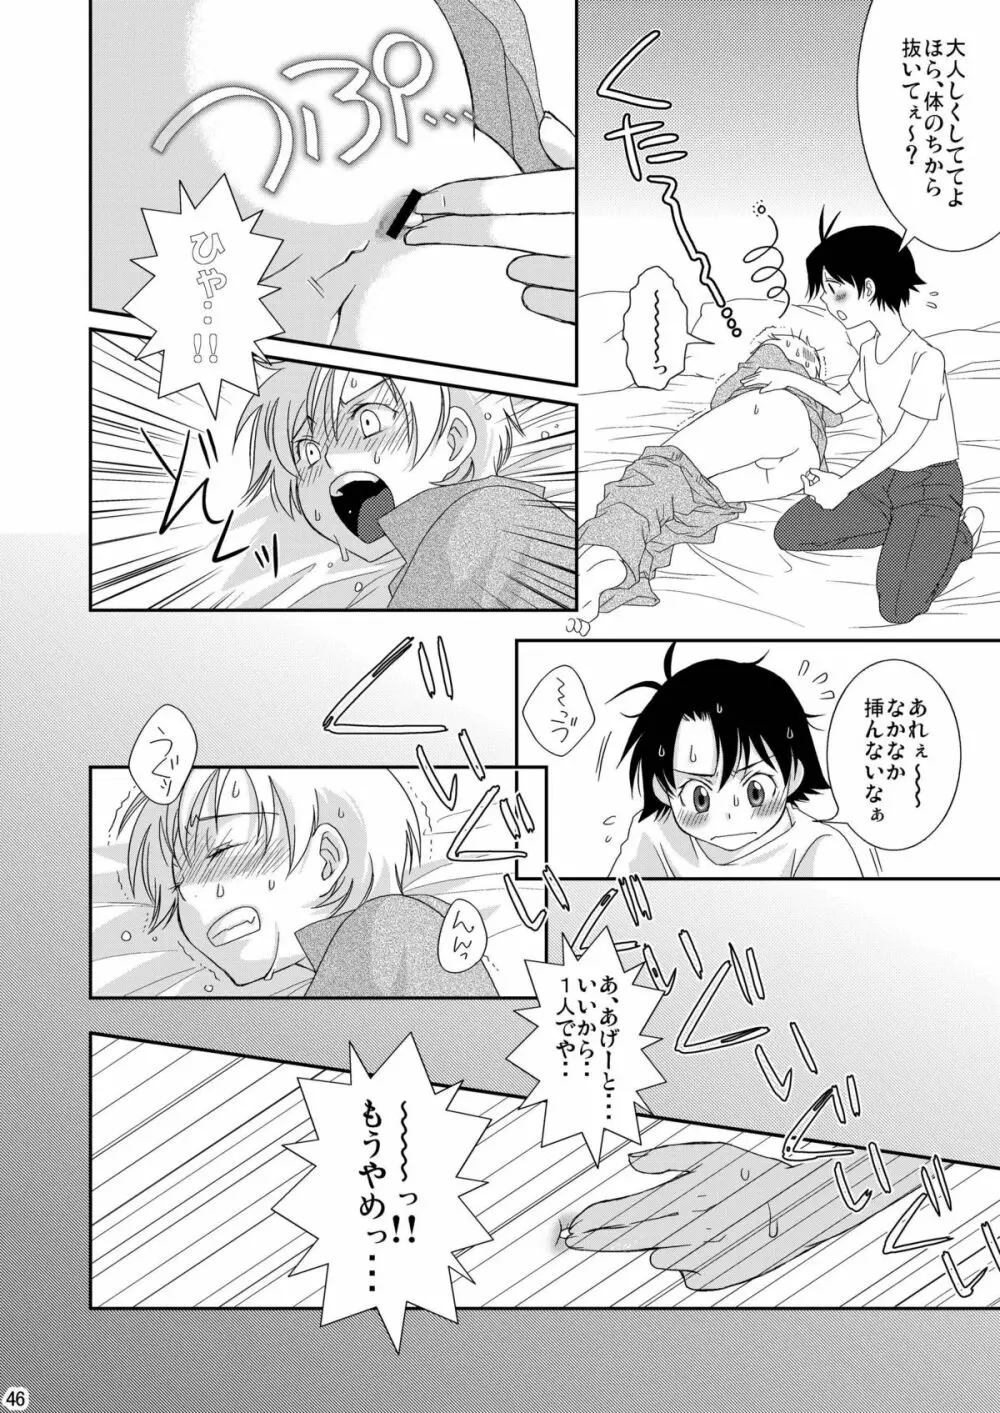 Re: ぷれい2 - page46